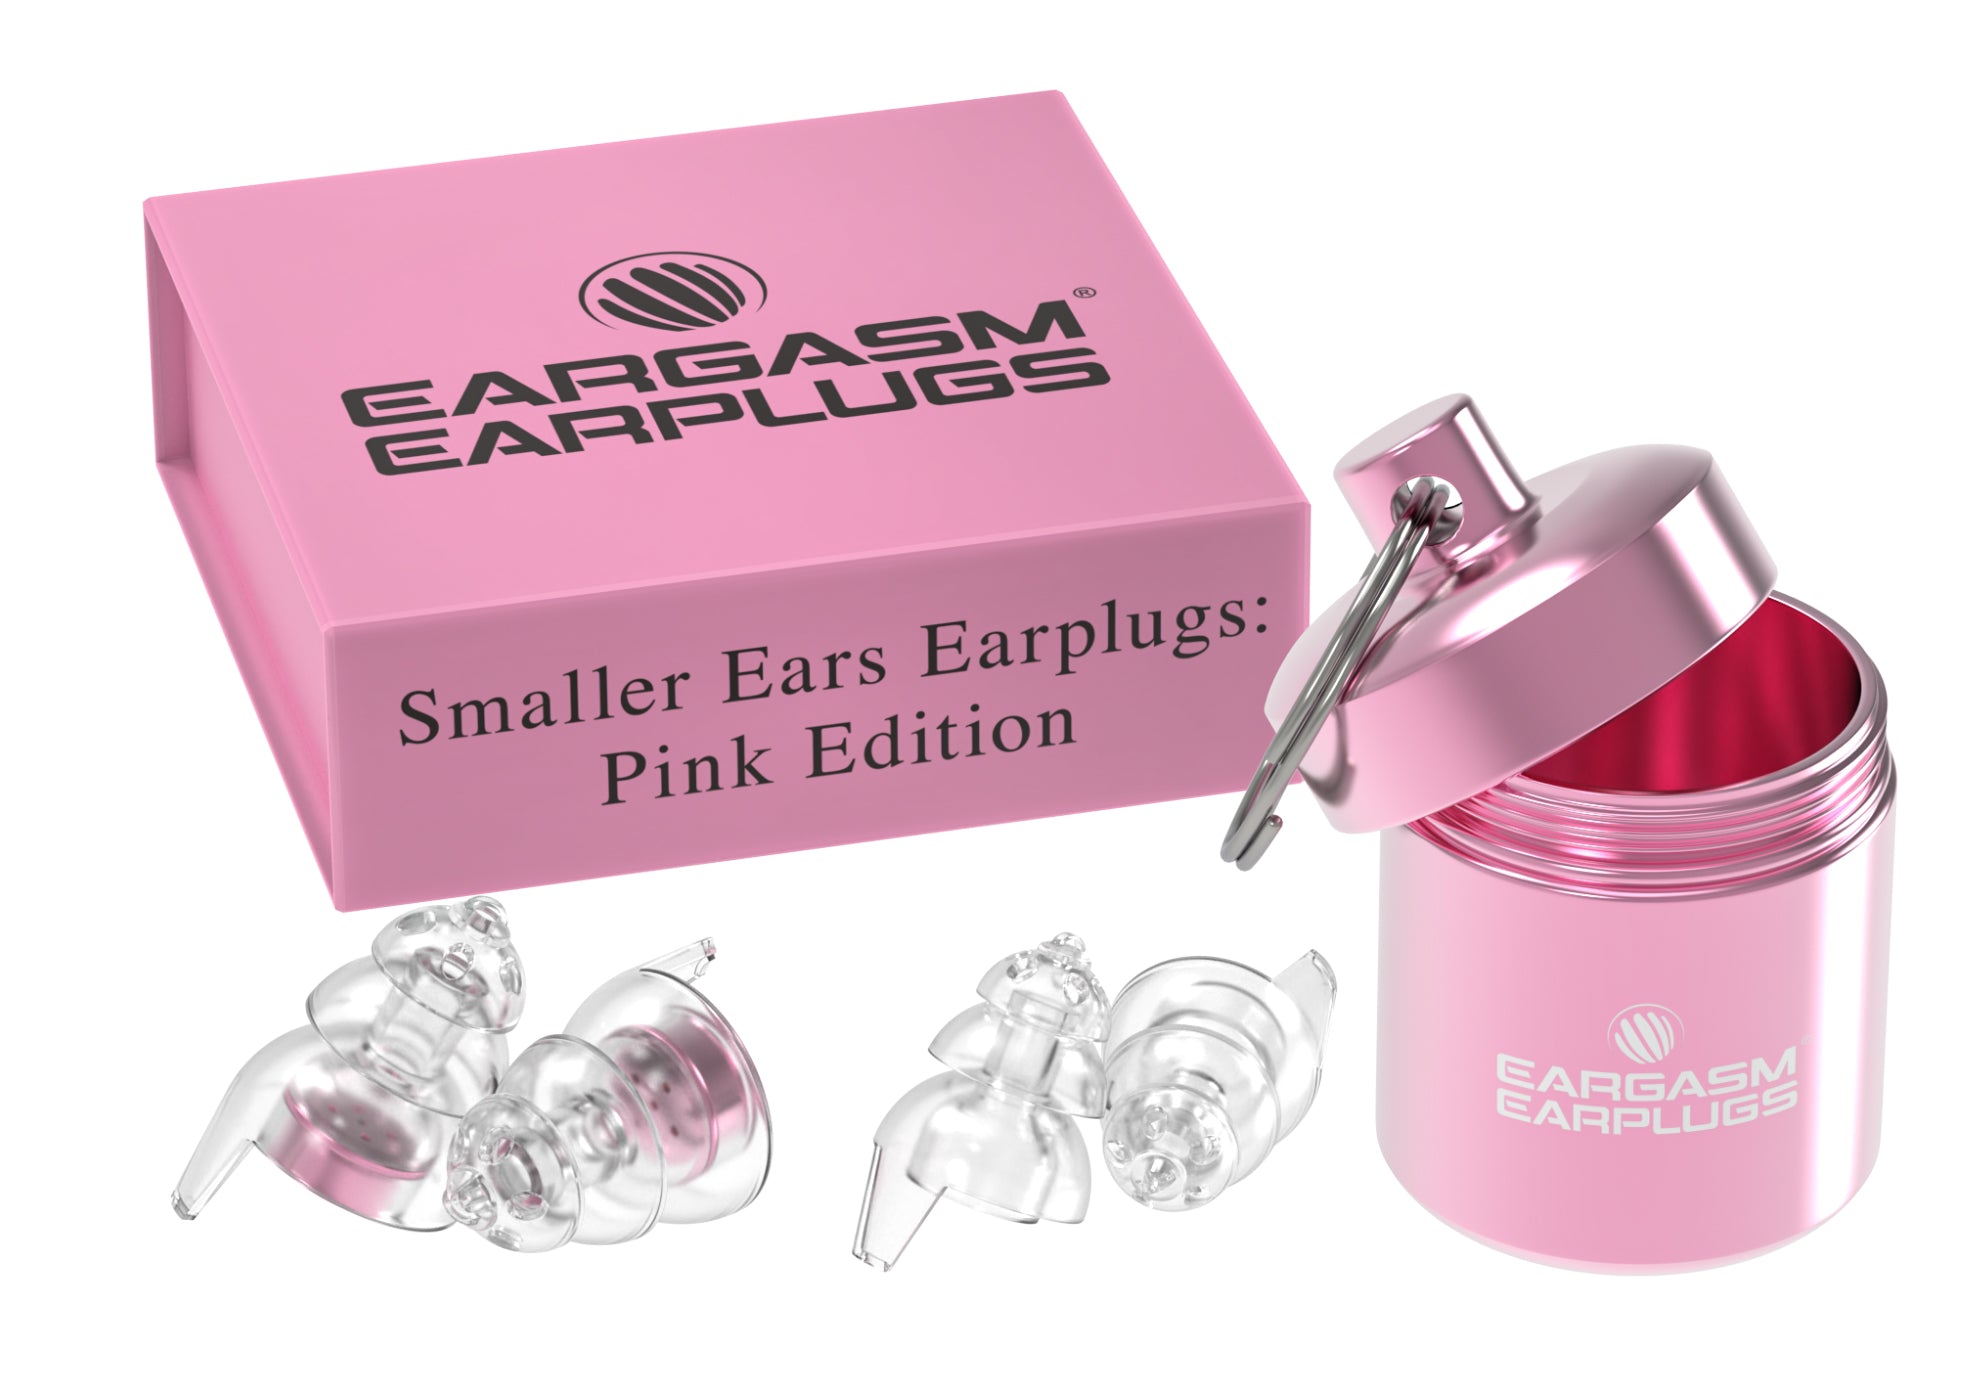 Eargasm Smaller Ears Earplugs: Pink Edition